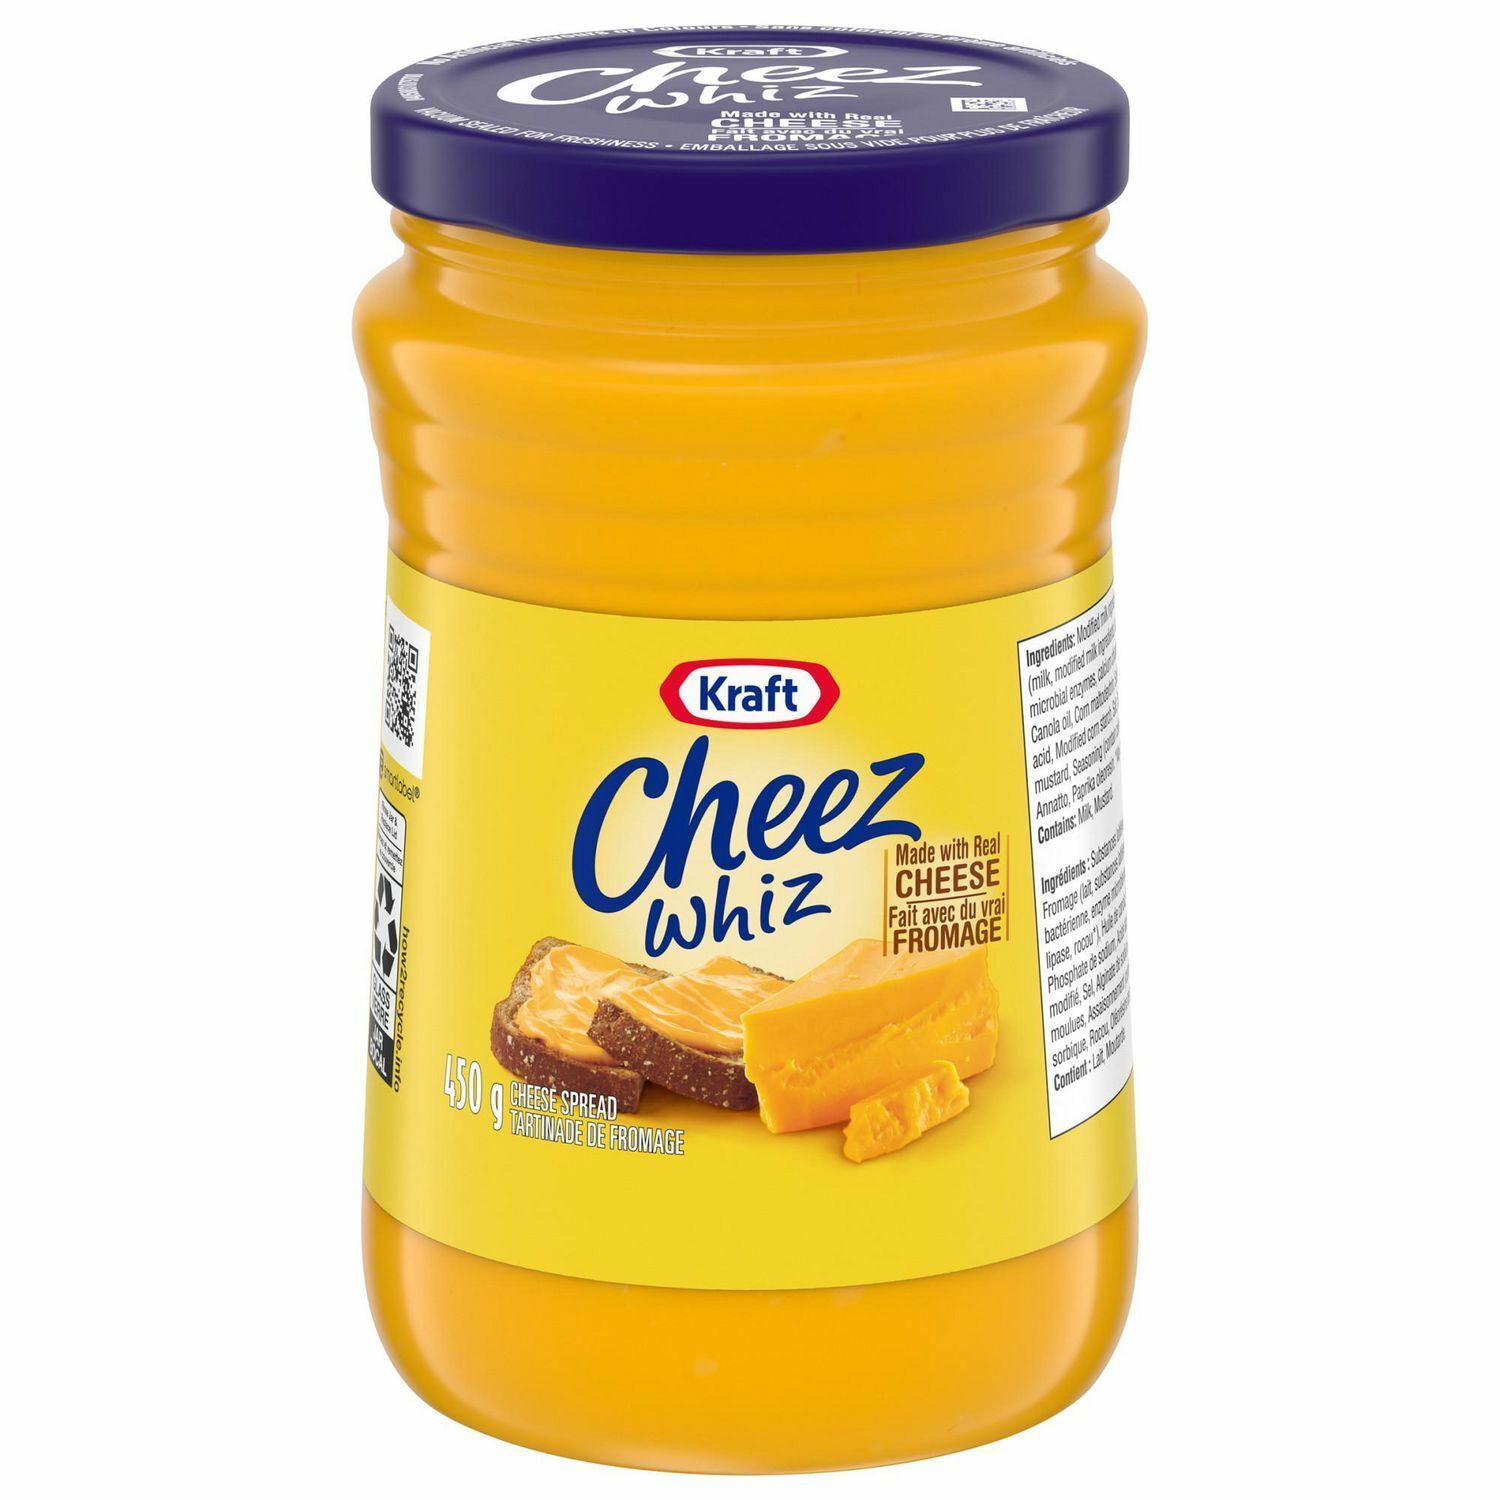 2 Jars of Kraft CHEEZ WHIZ Original Spread 450g / 15.8 oz Each - Free Shipping - $26.13